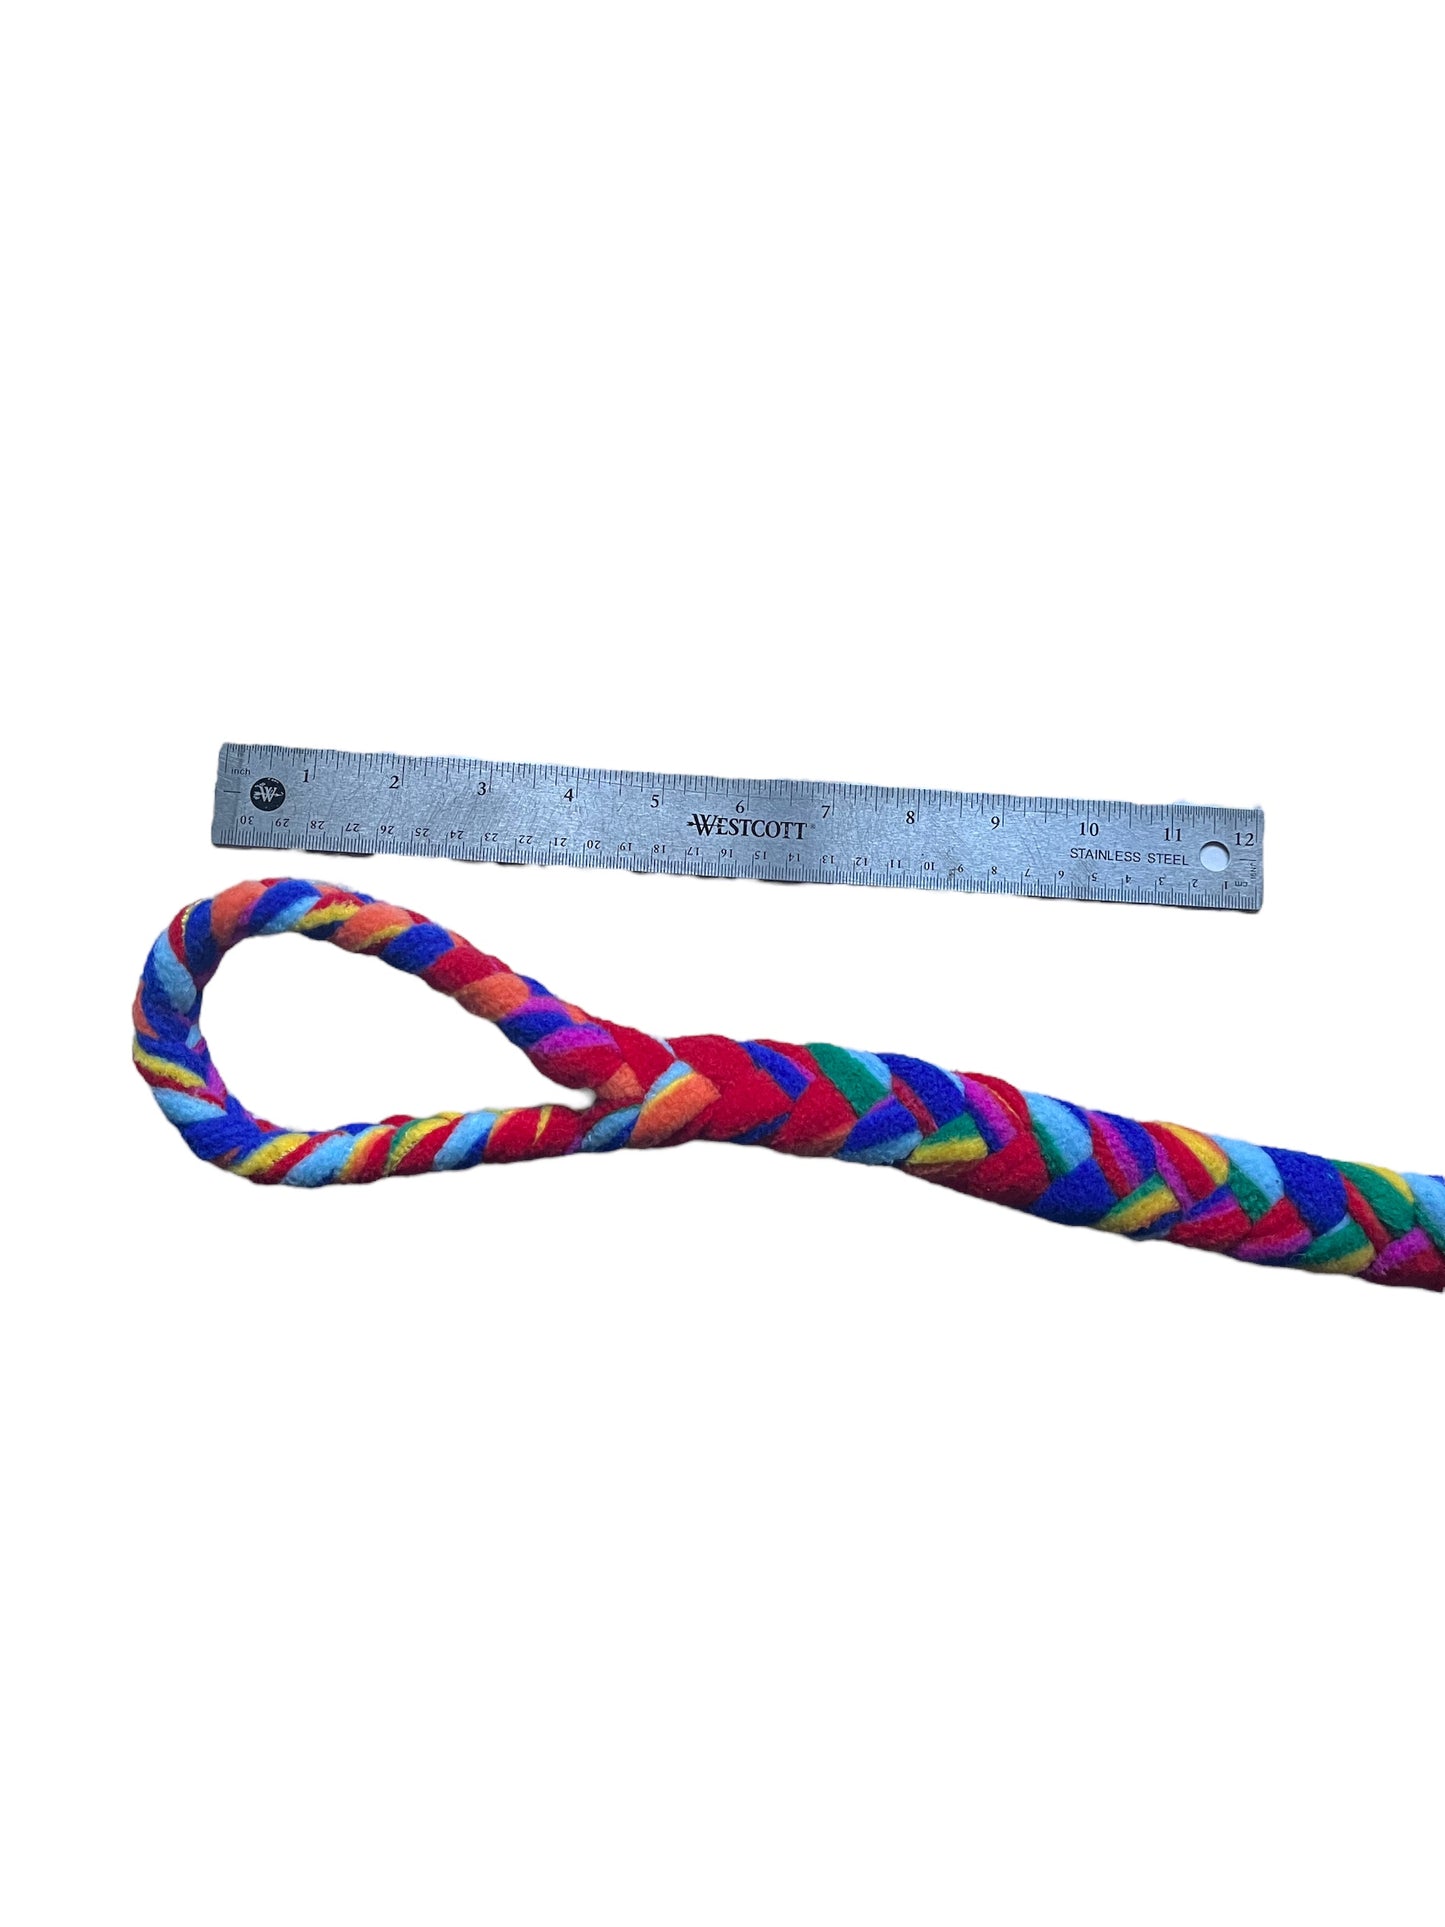 Rainbow Handled plated tug toy